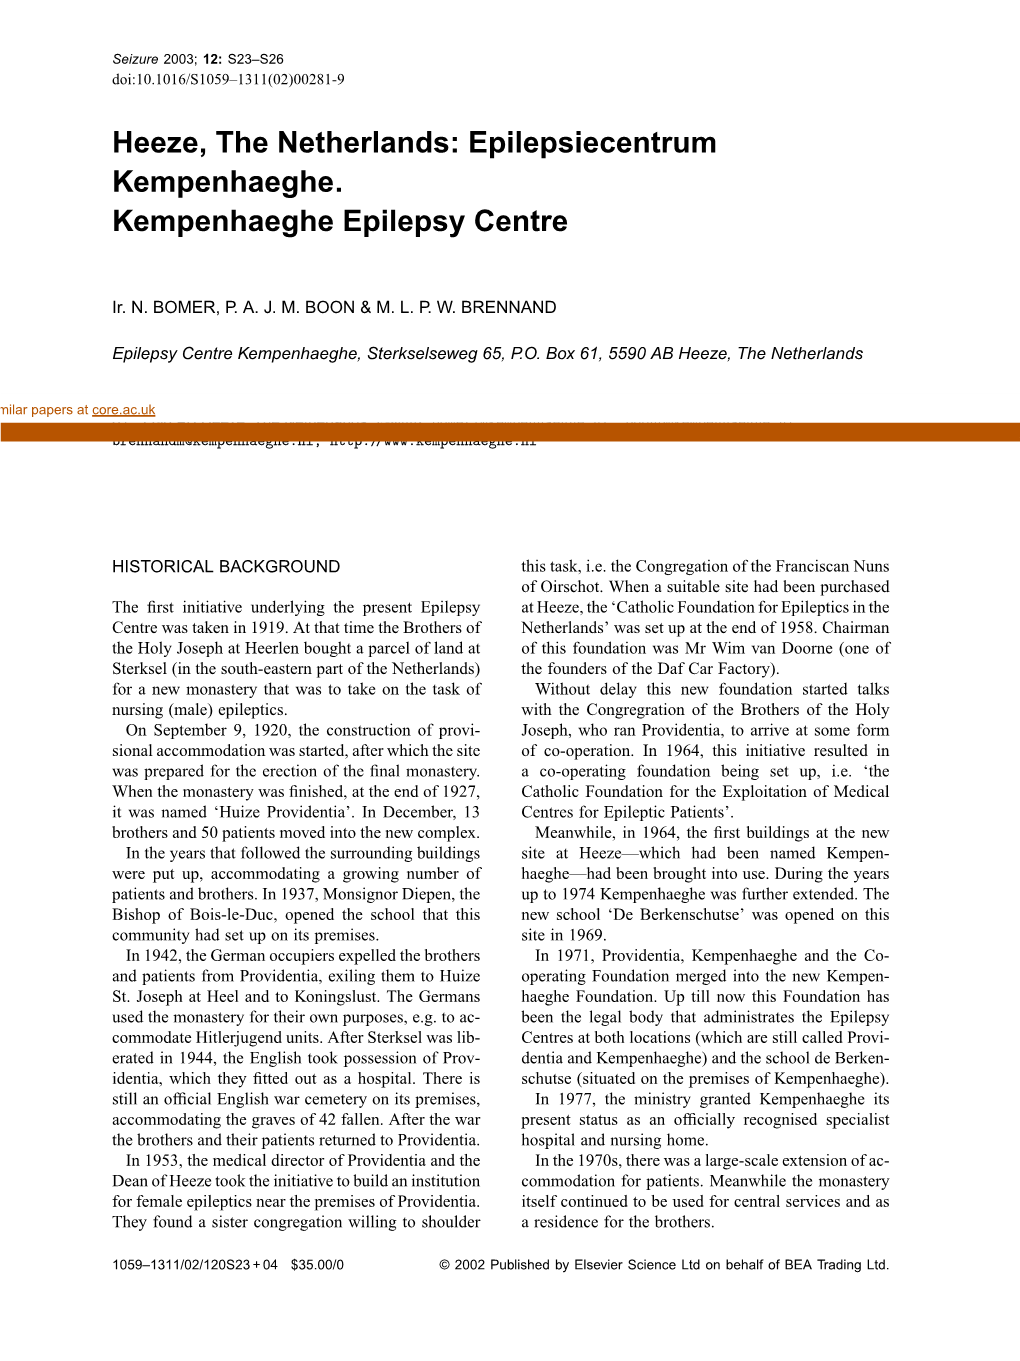 Heeze, the Netherlands: Epilepsiecentrum Kempenhaeghe